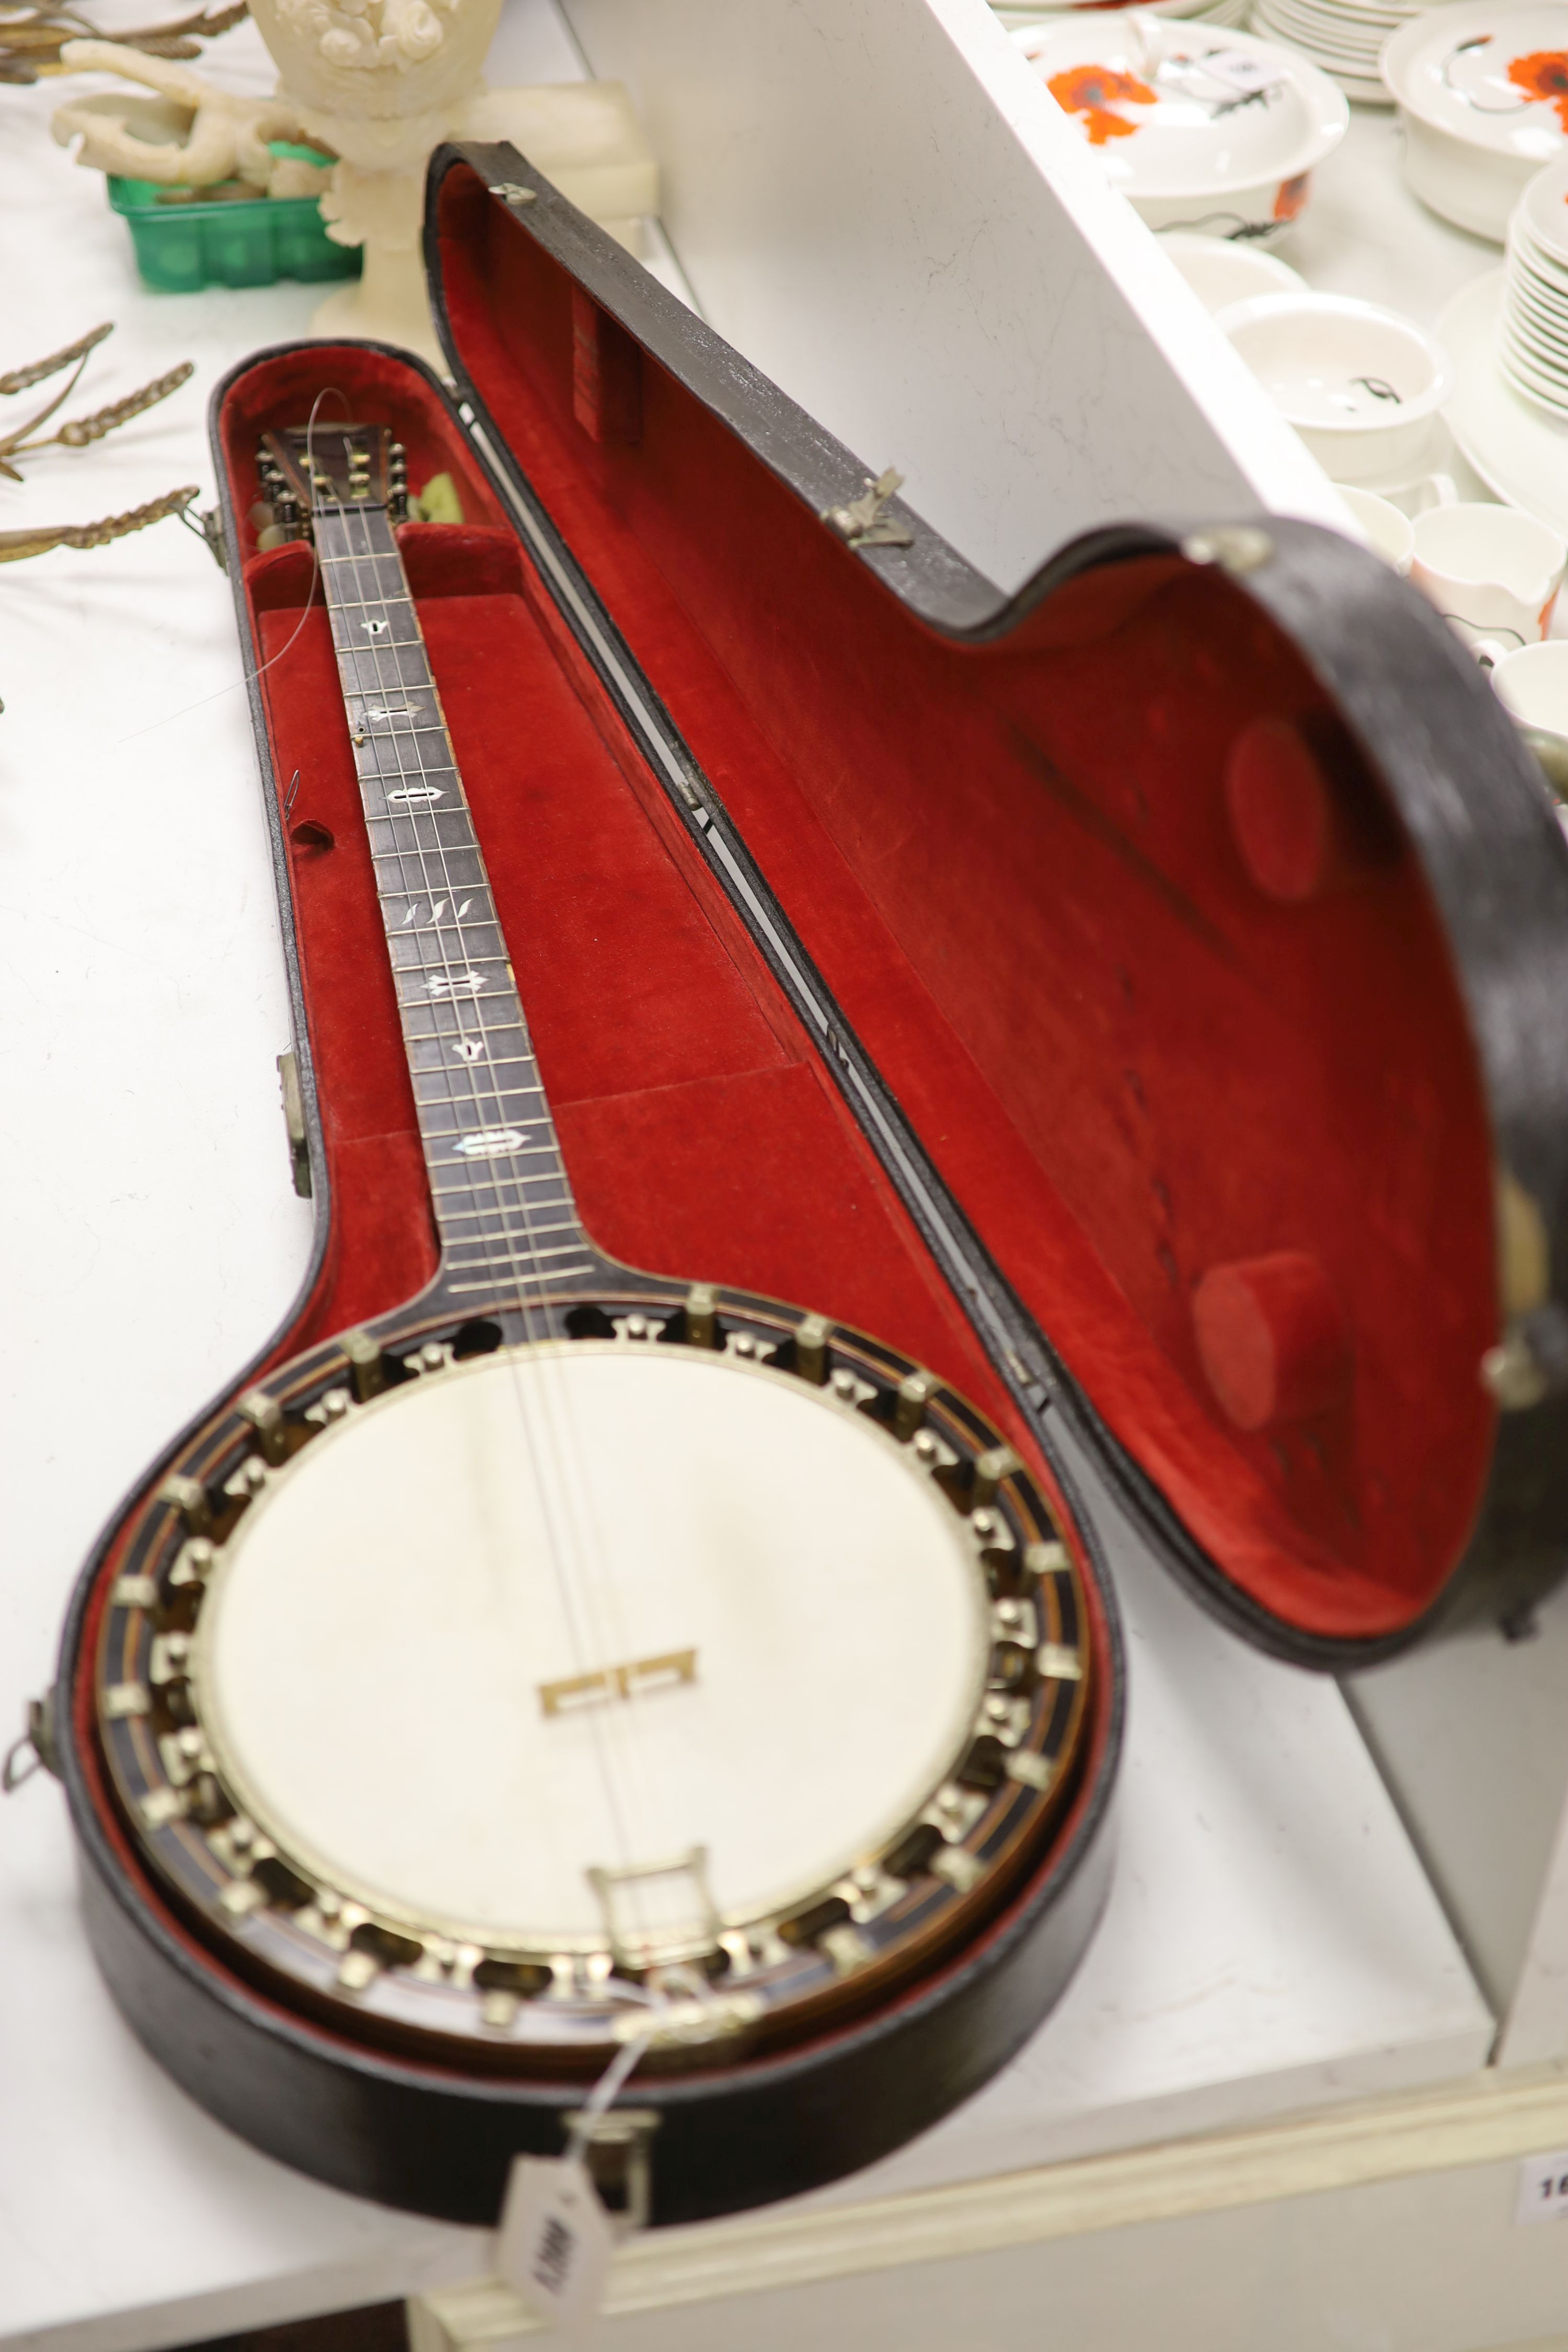 The Olly Oakley model zither banjo made by AO Windsor, 6 strings, cased, length 95cm